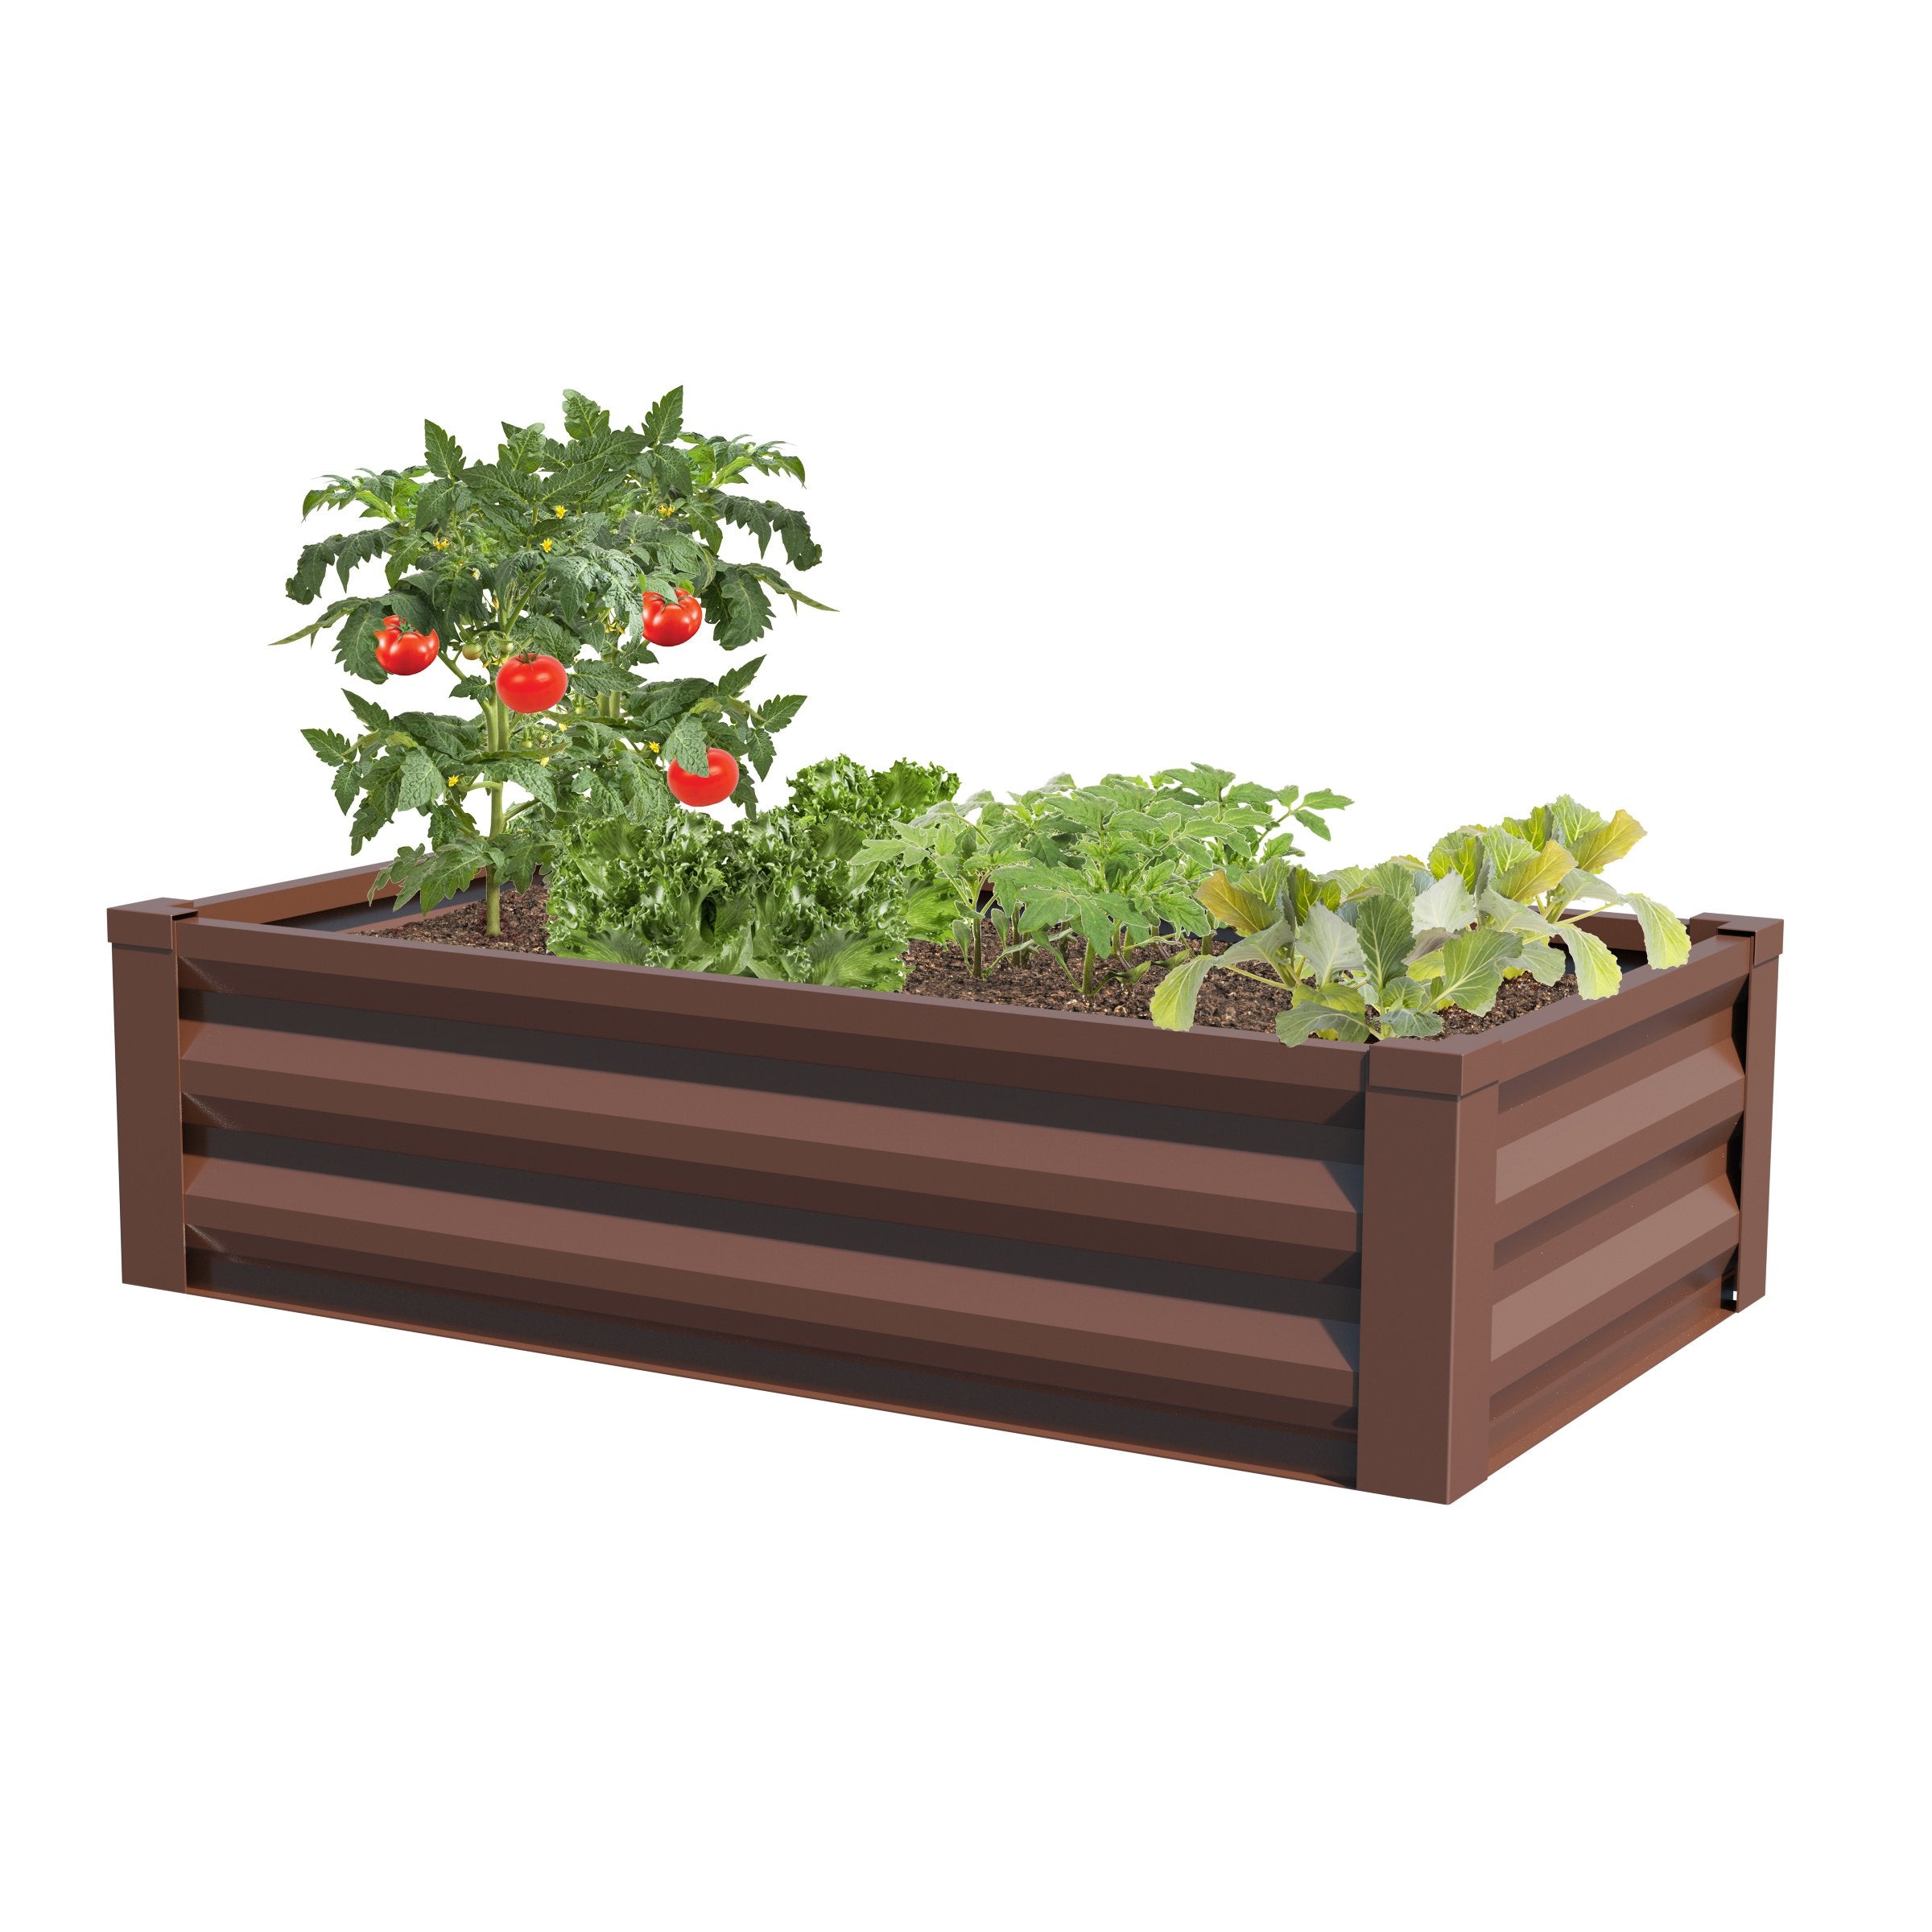 Sundase™ Raised Planter Boxes Metal Above Ground Garden Bed for Vegetables